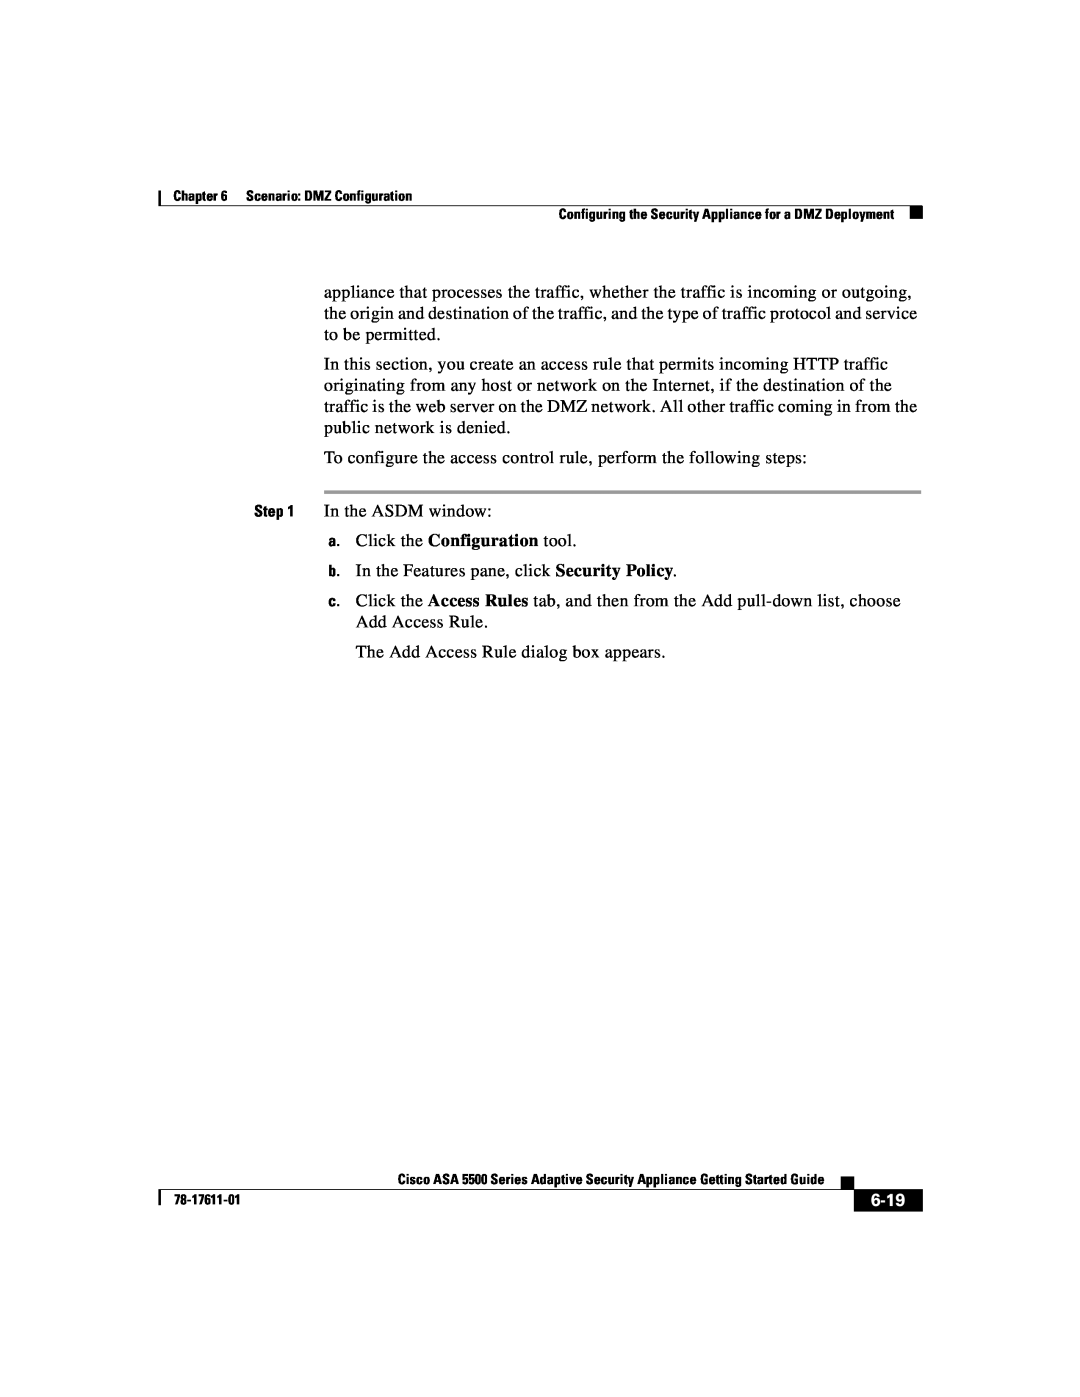 Cisco Systems ASA 5500 manual In the ASDM window, 6-19 